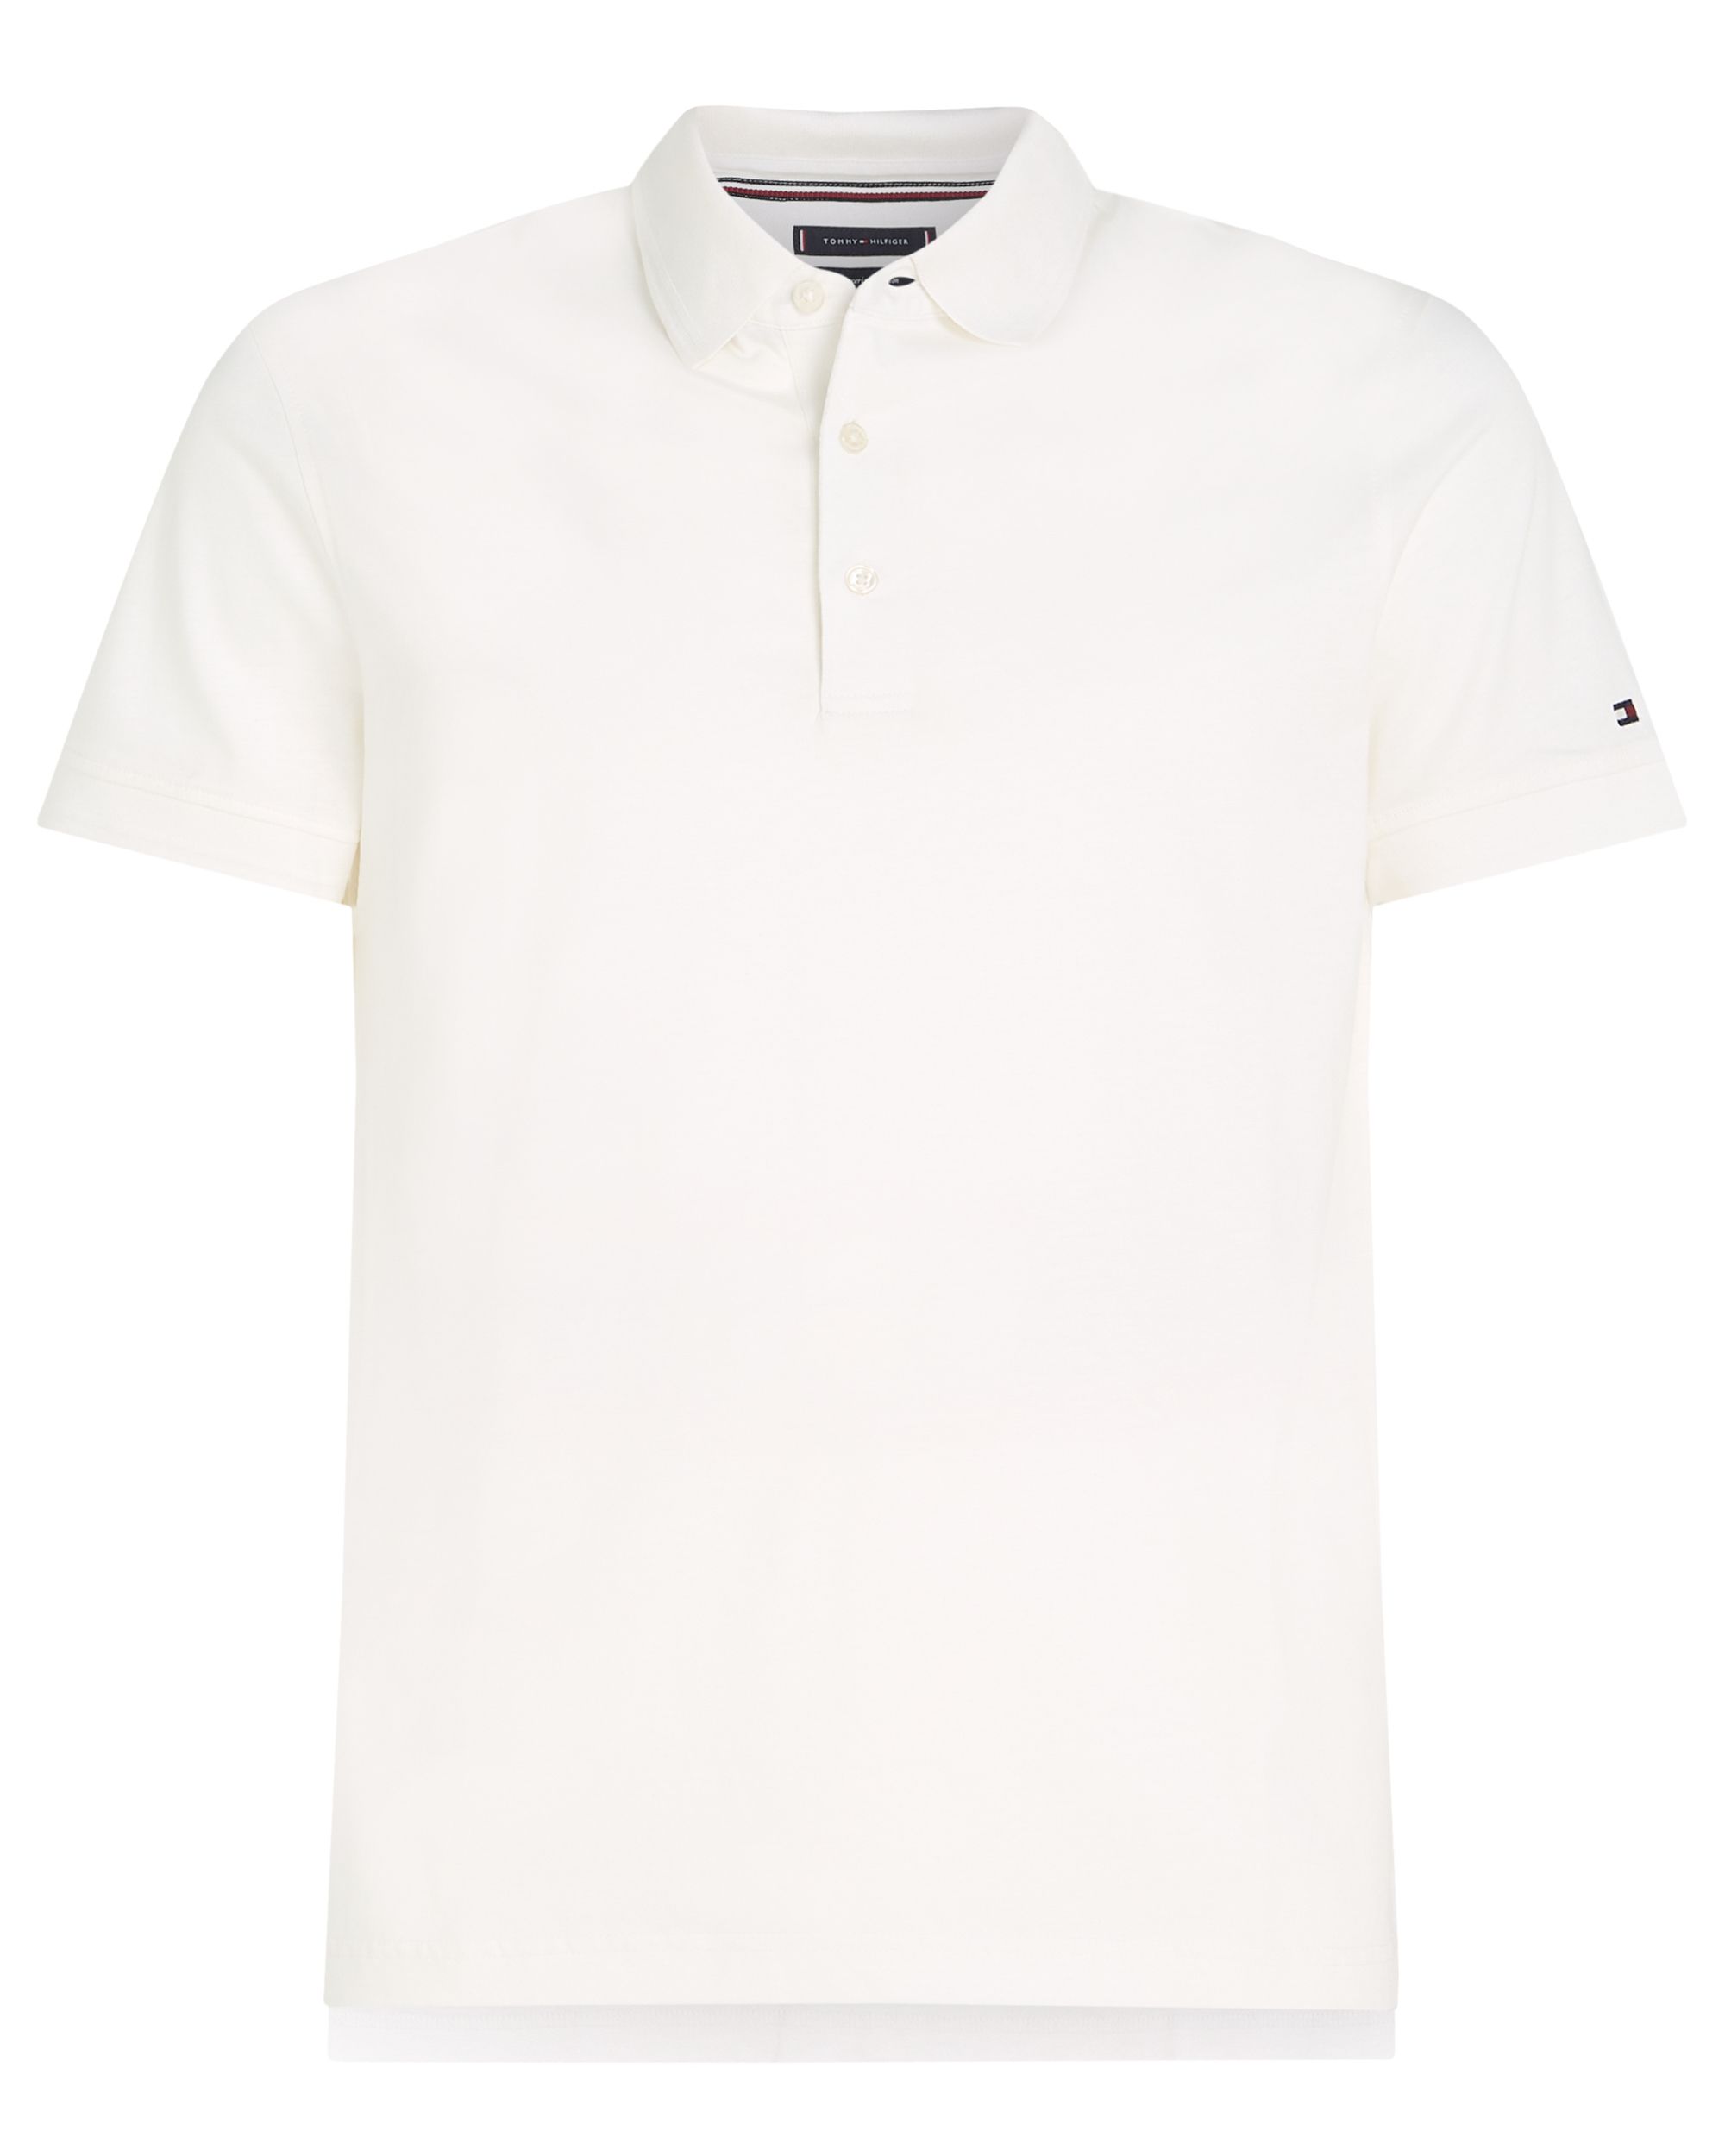 Tommy Hilfiger Menswear Polo KM Off white 095635-001-L